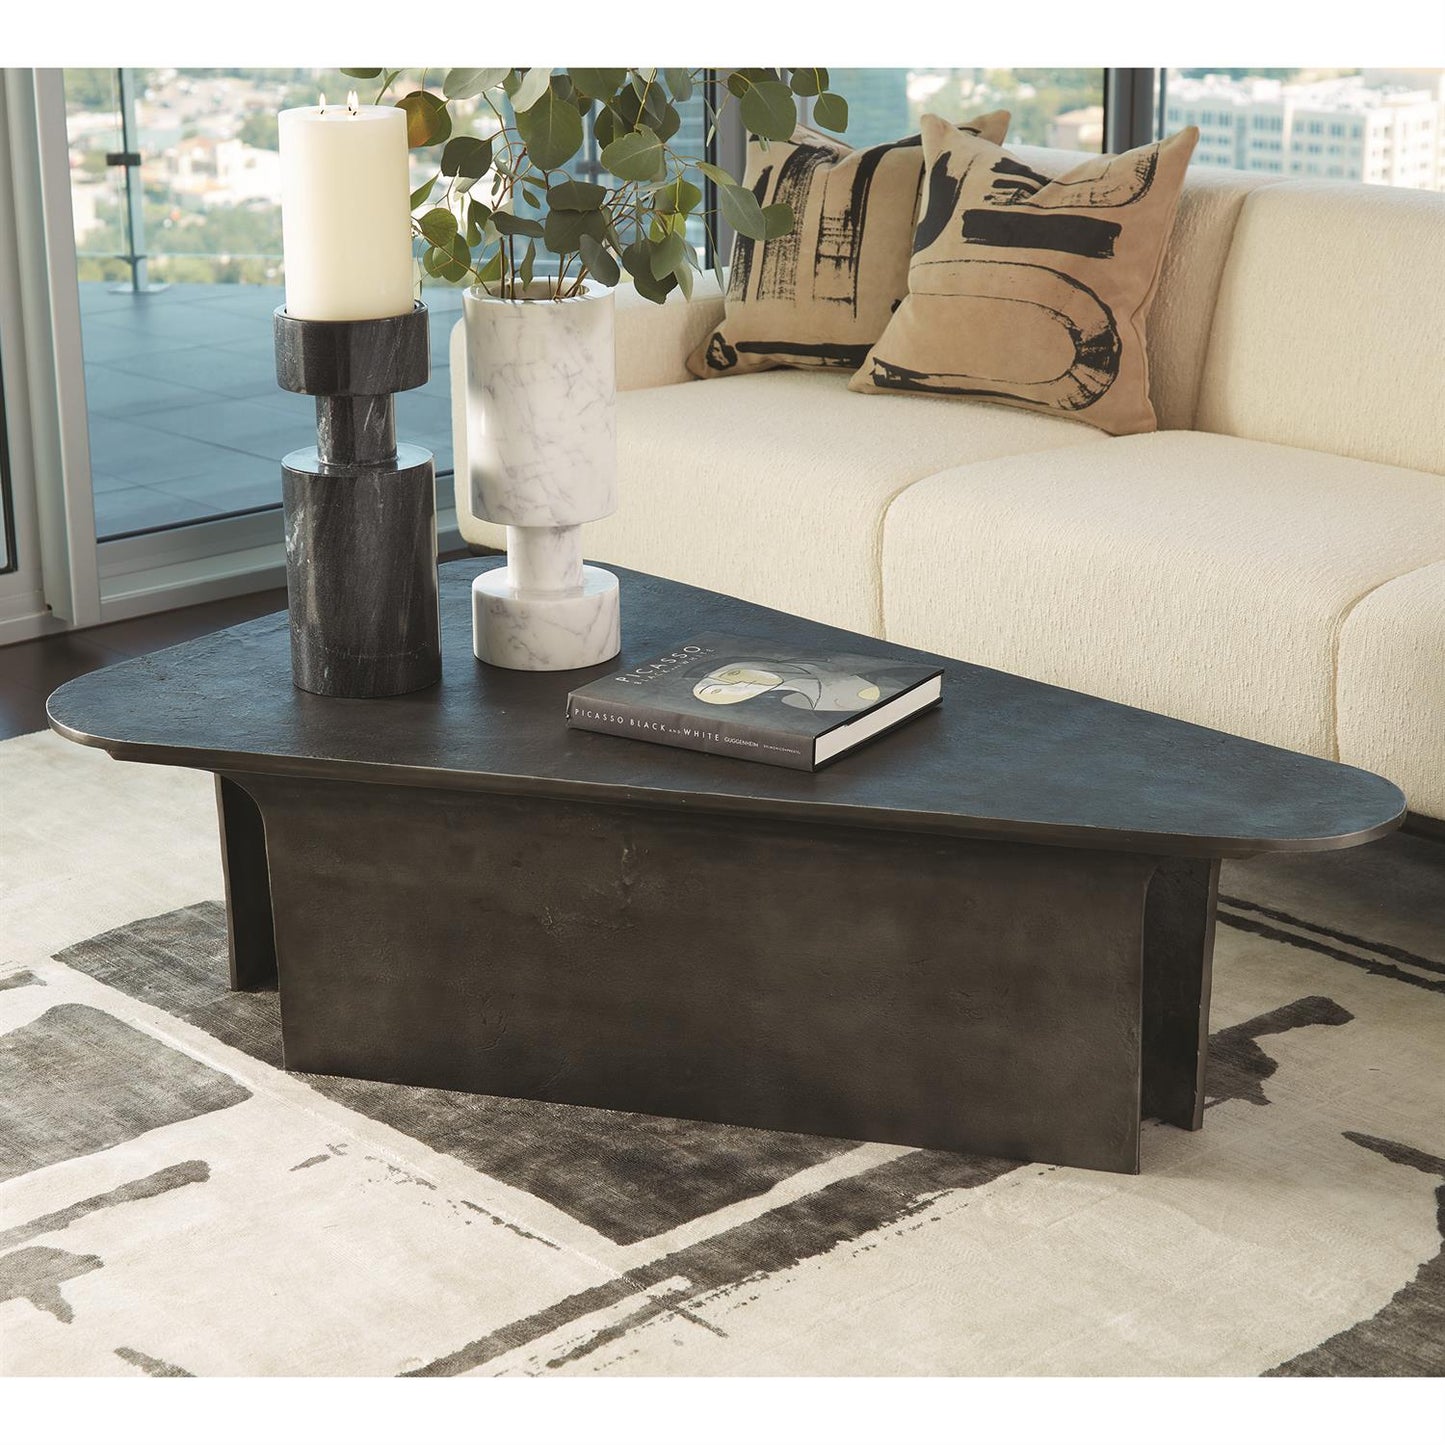 Sophie Coffee Table - Grats Decor Interior Design & Build Inc.